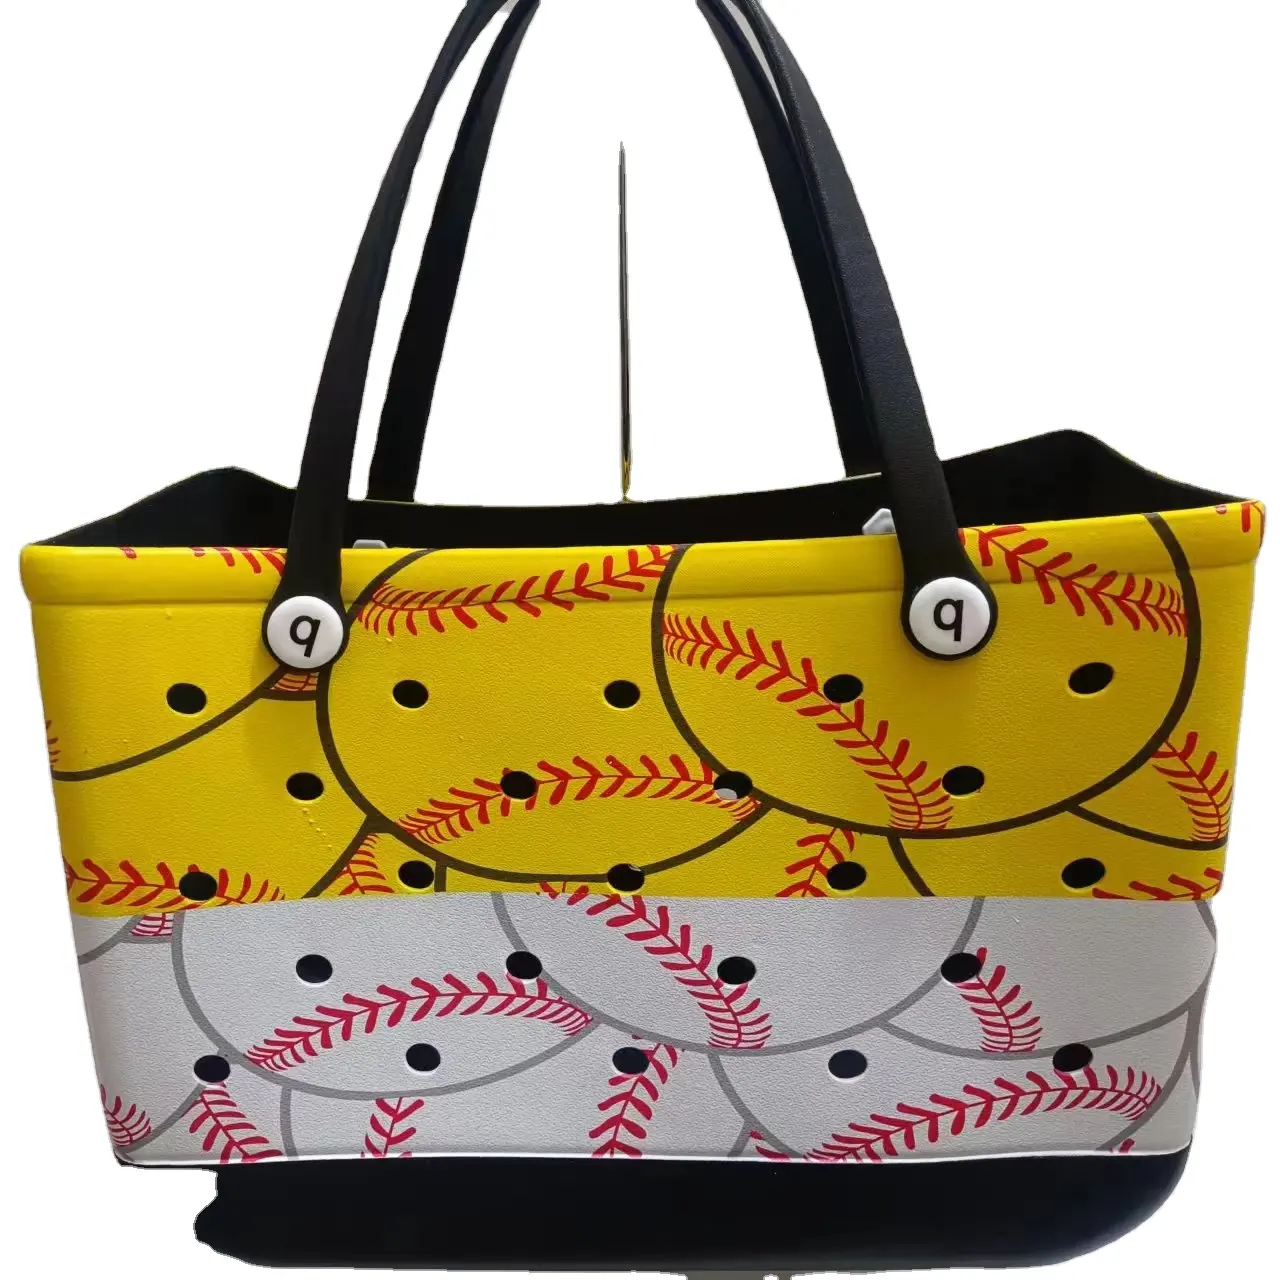 Wholesale women's large Eva handbags, rubber silicone beach bags, popular summer waterproof Bogg bag